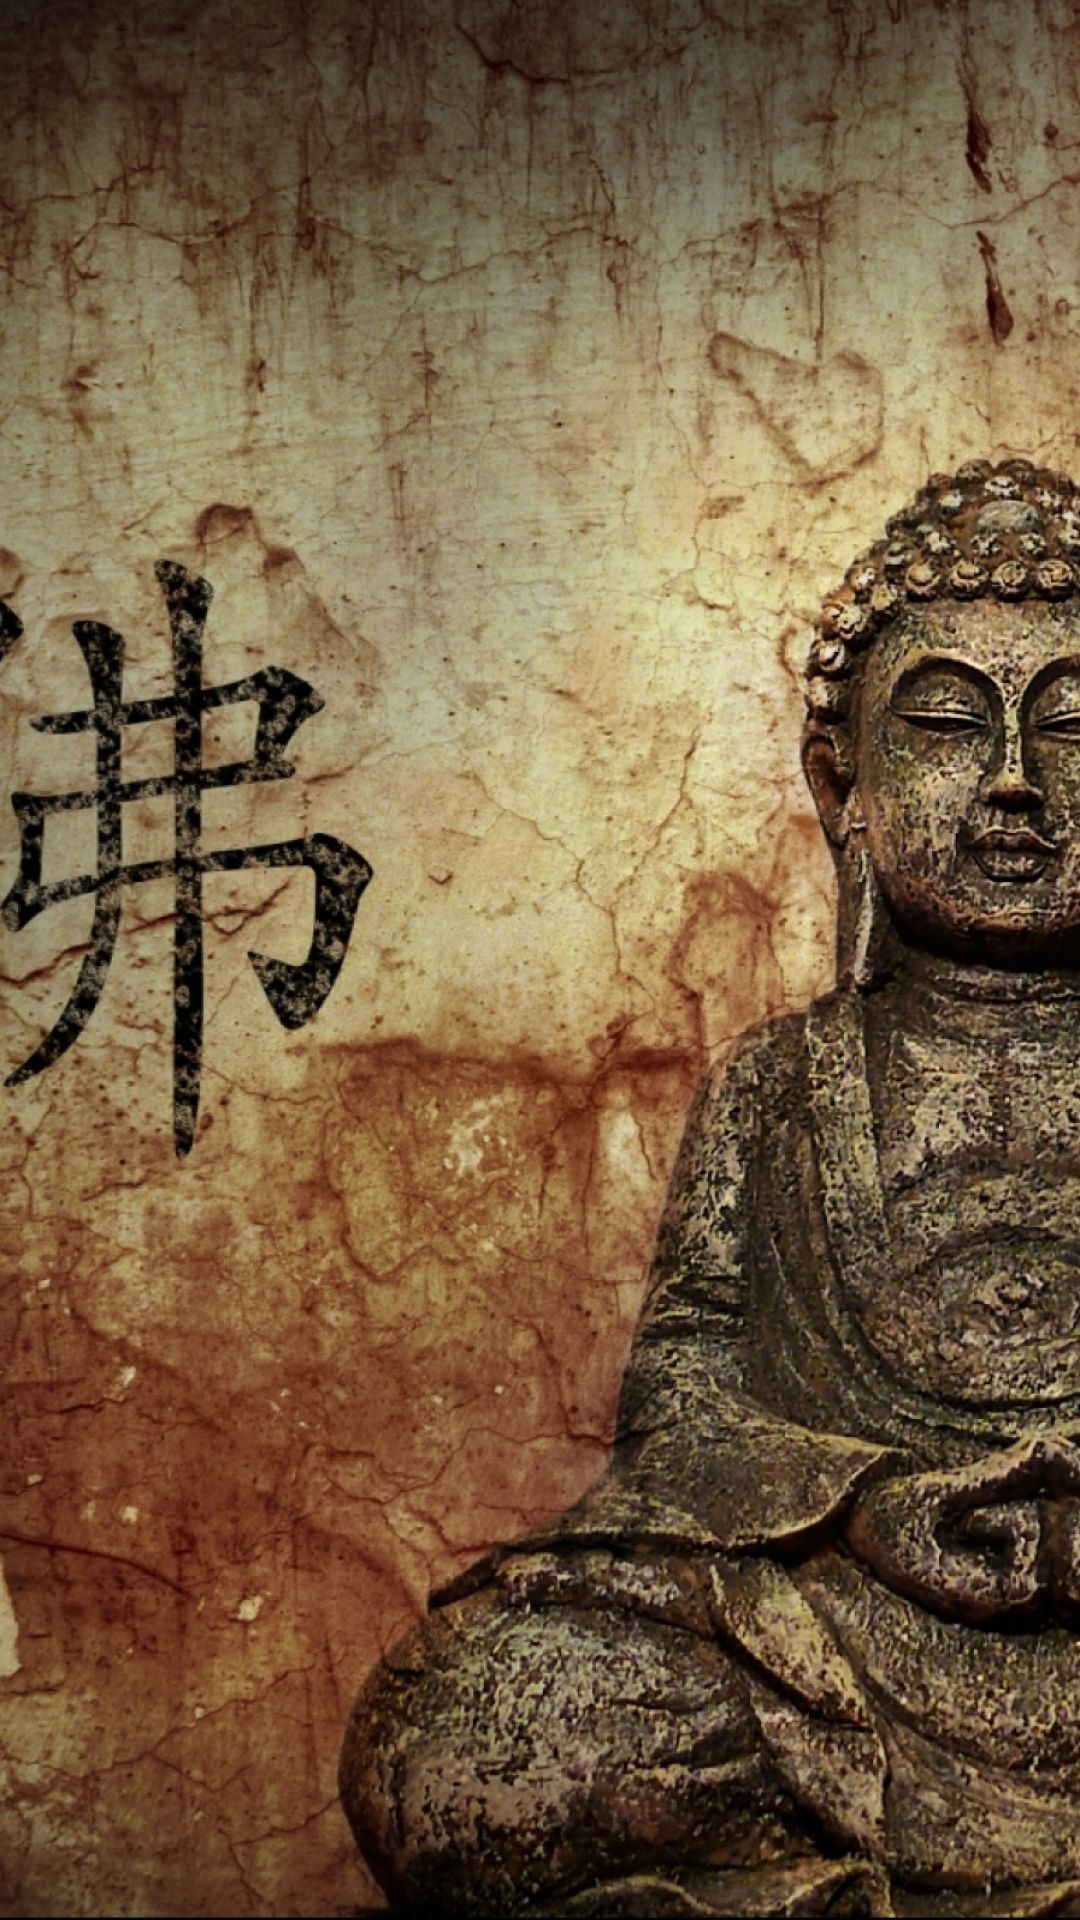 1080x1920 buddha iphone обои - Поиск в Google Буддизм обои Будда обои i...